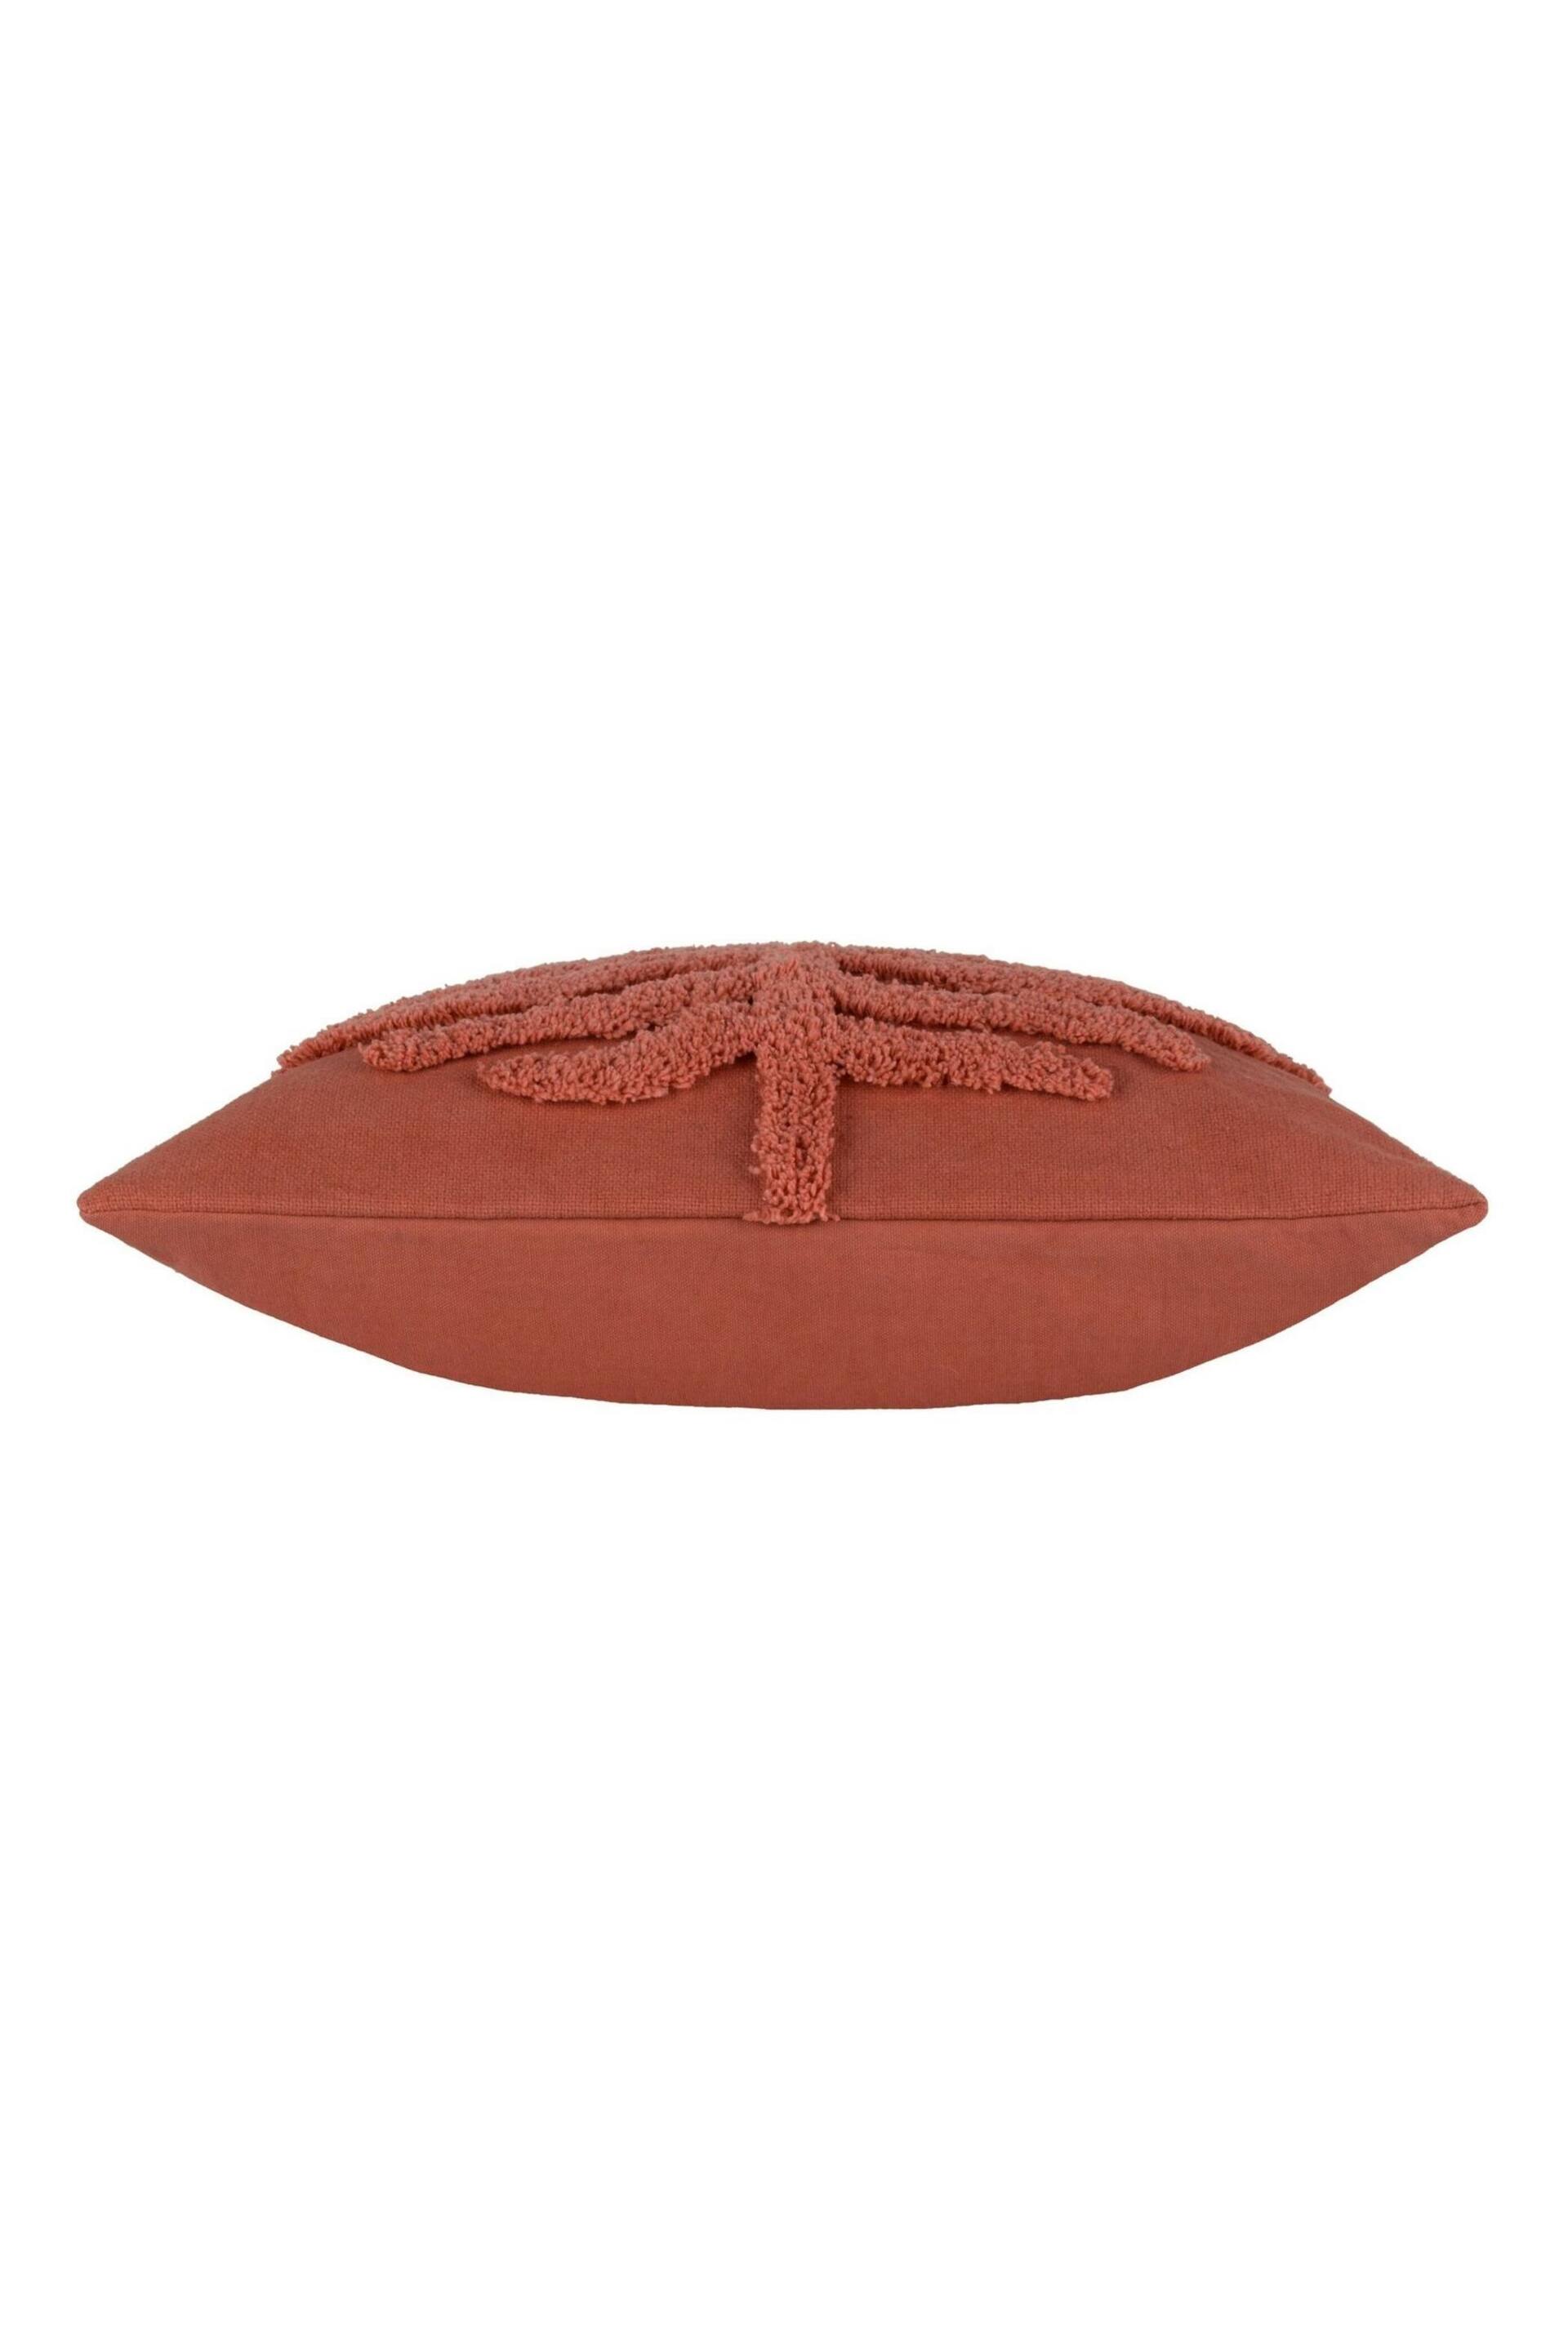 Furn Red Dakota Tufted Feather Filled Cushion - Image 5 of 6